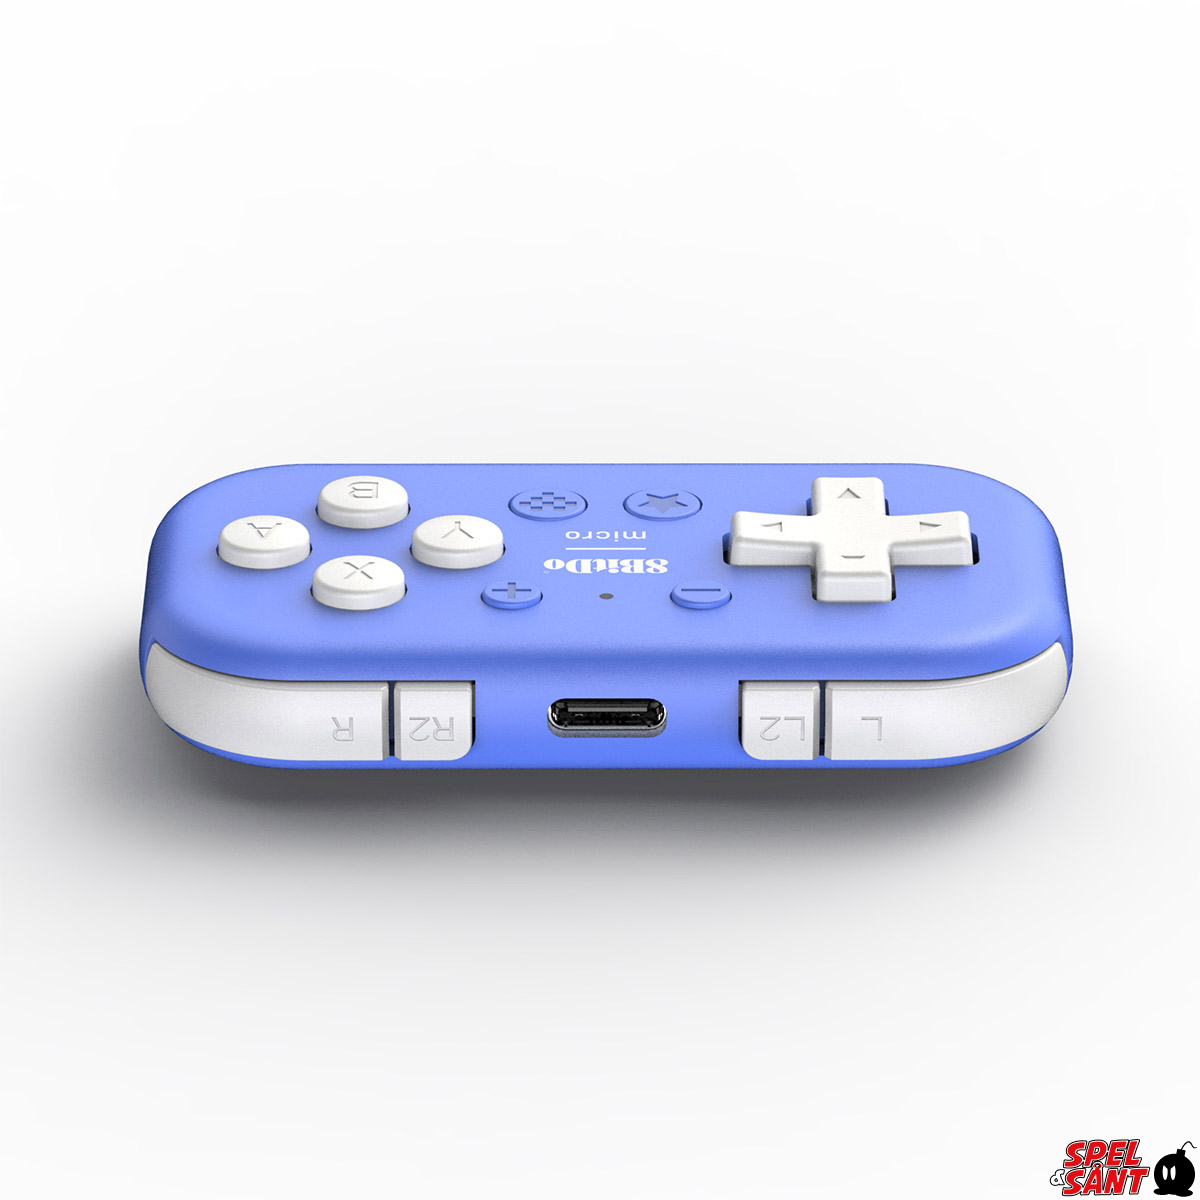 8Bitdo Micro Bluetooth Gamepad - Blue